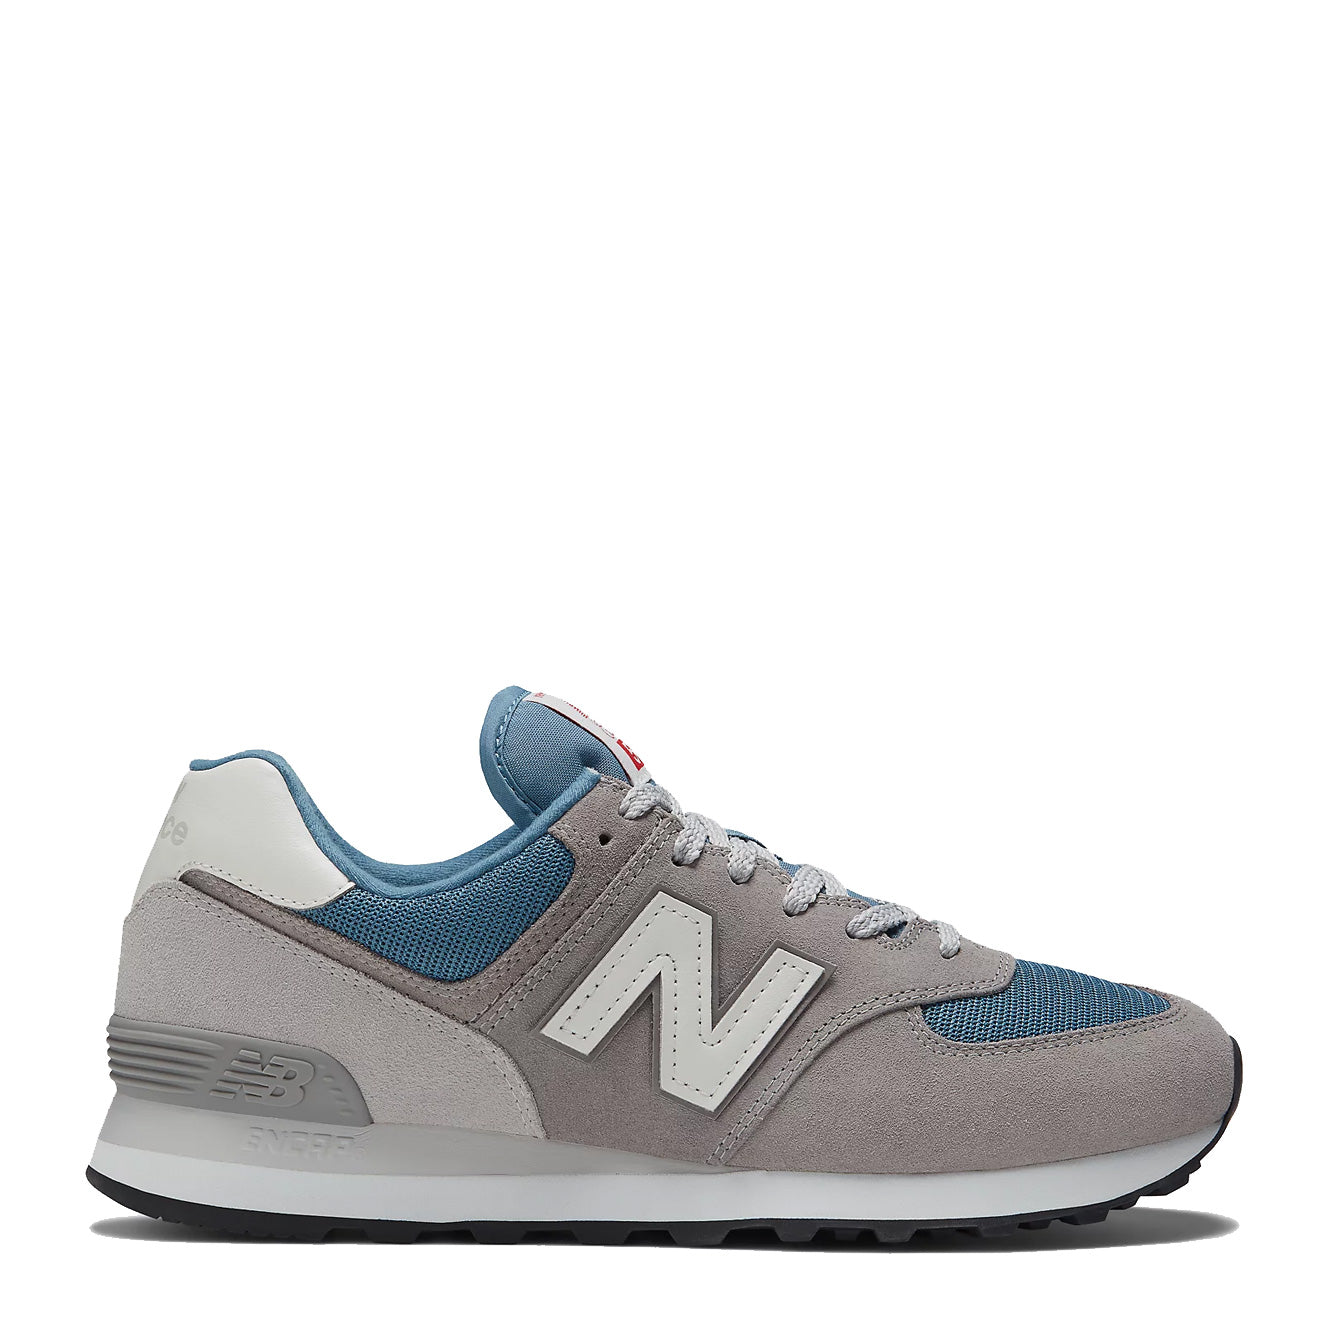 New Balance 574 Trainers Grey / Blue | Yards Store Menswear